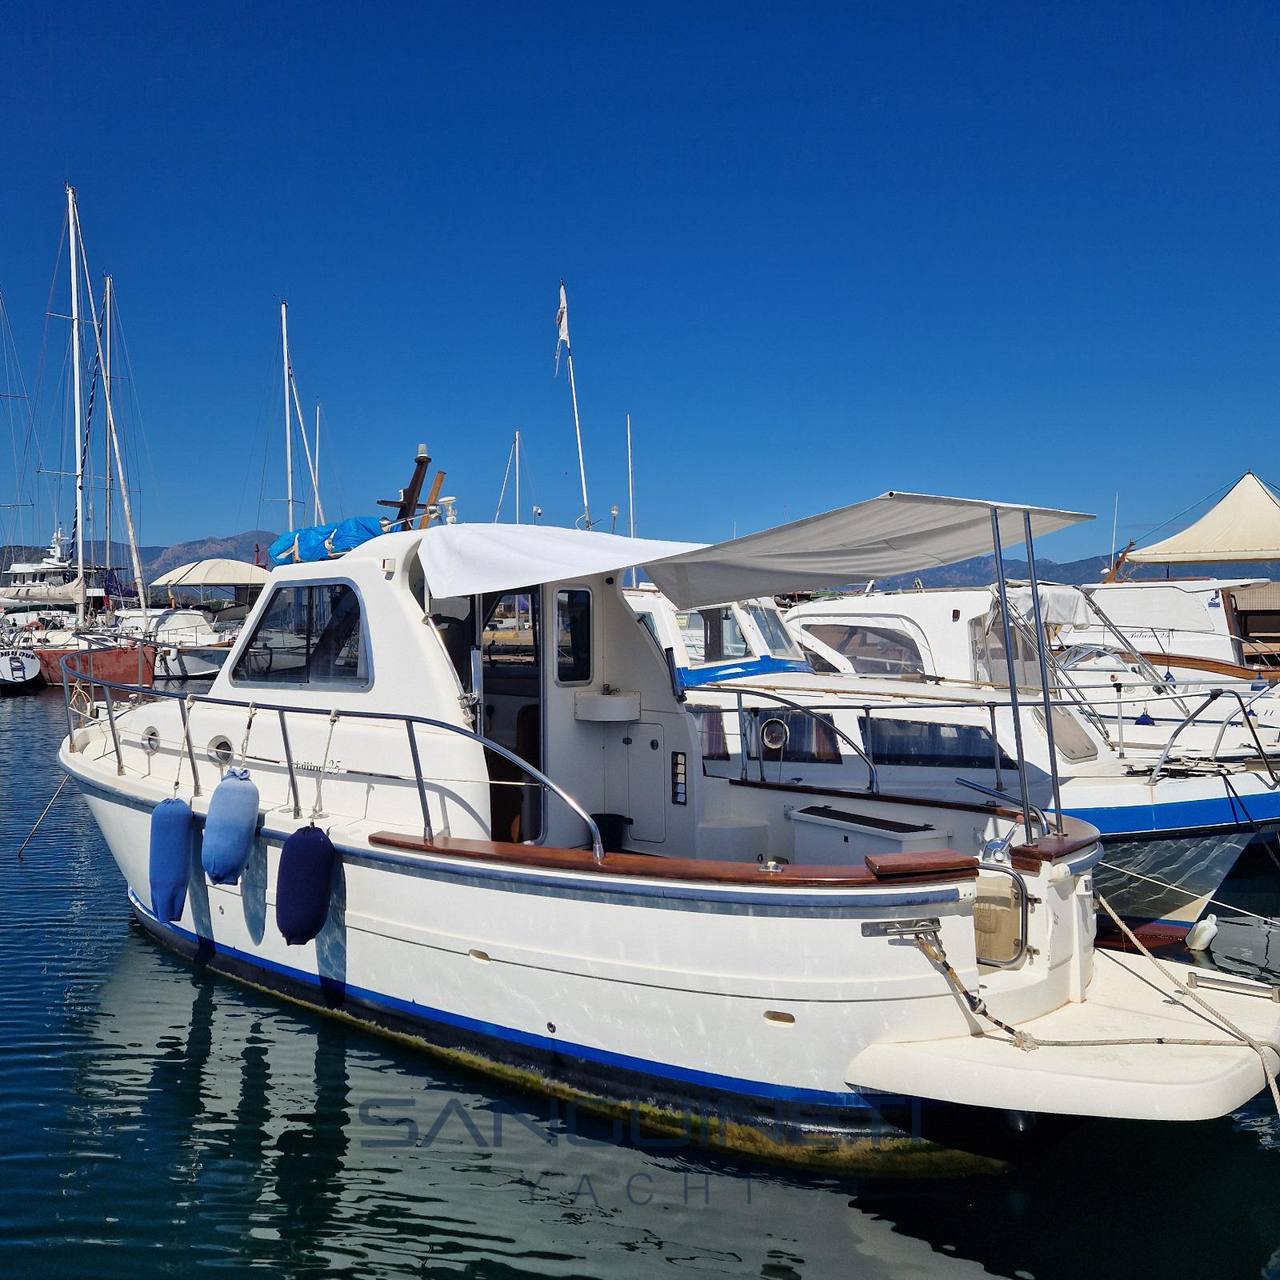 Sciallino 25 sport Motor boat used for sale